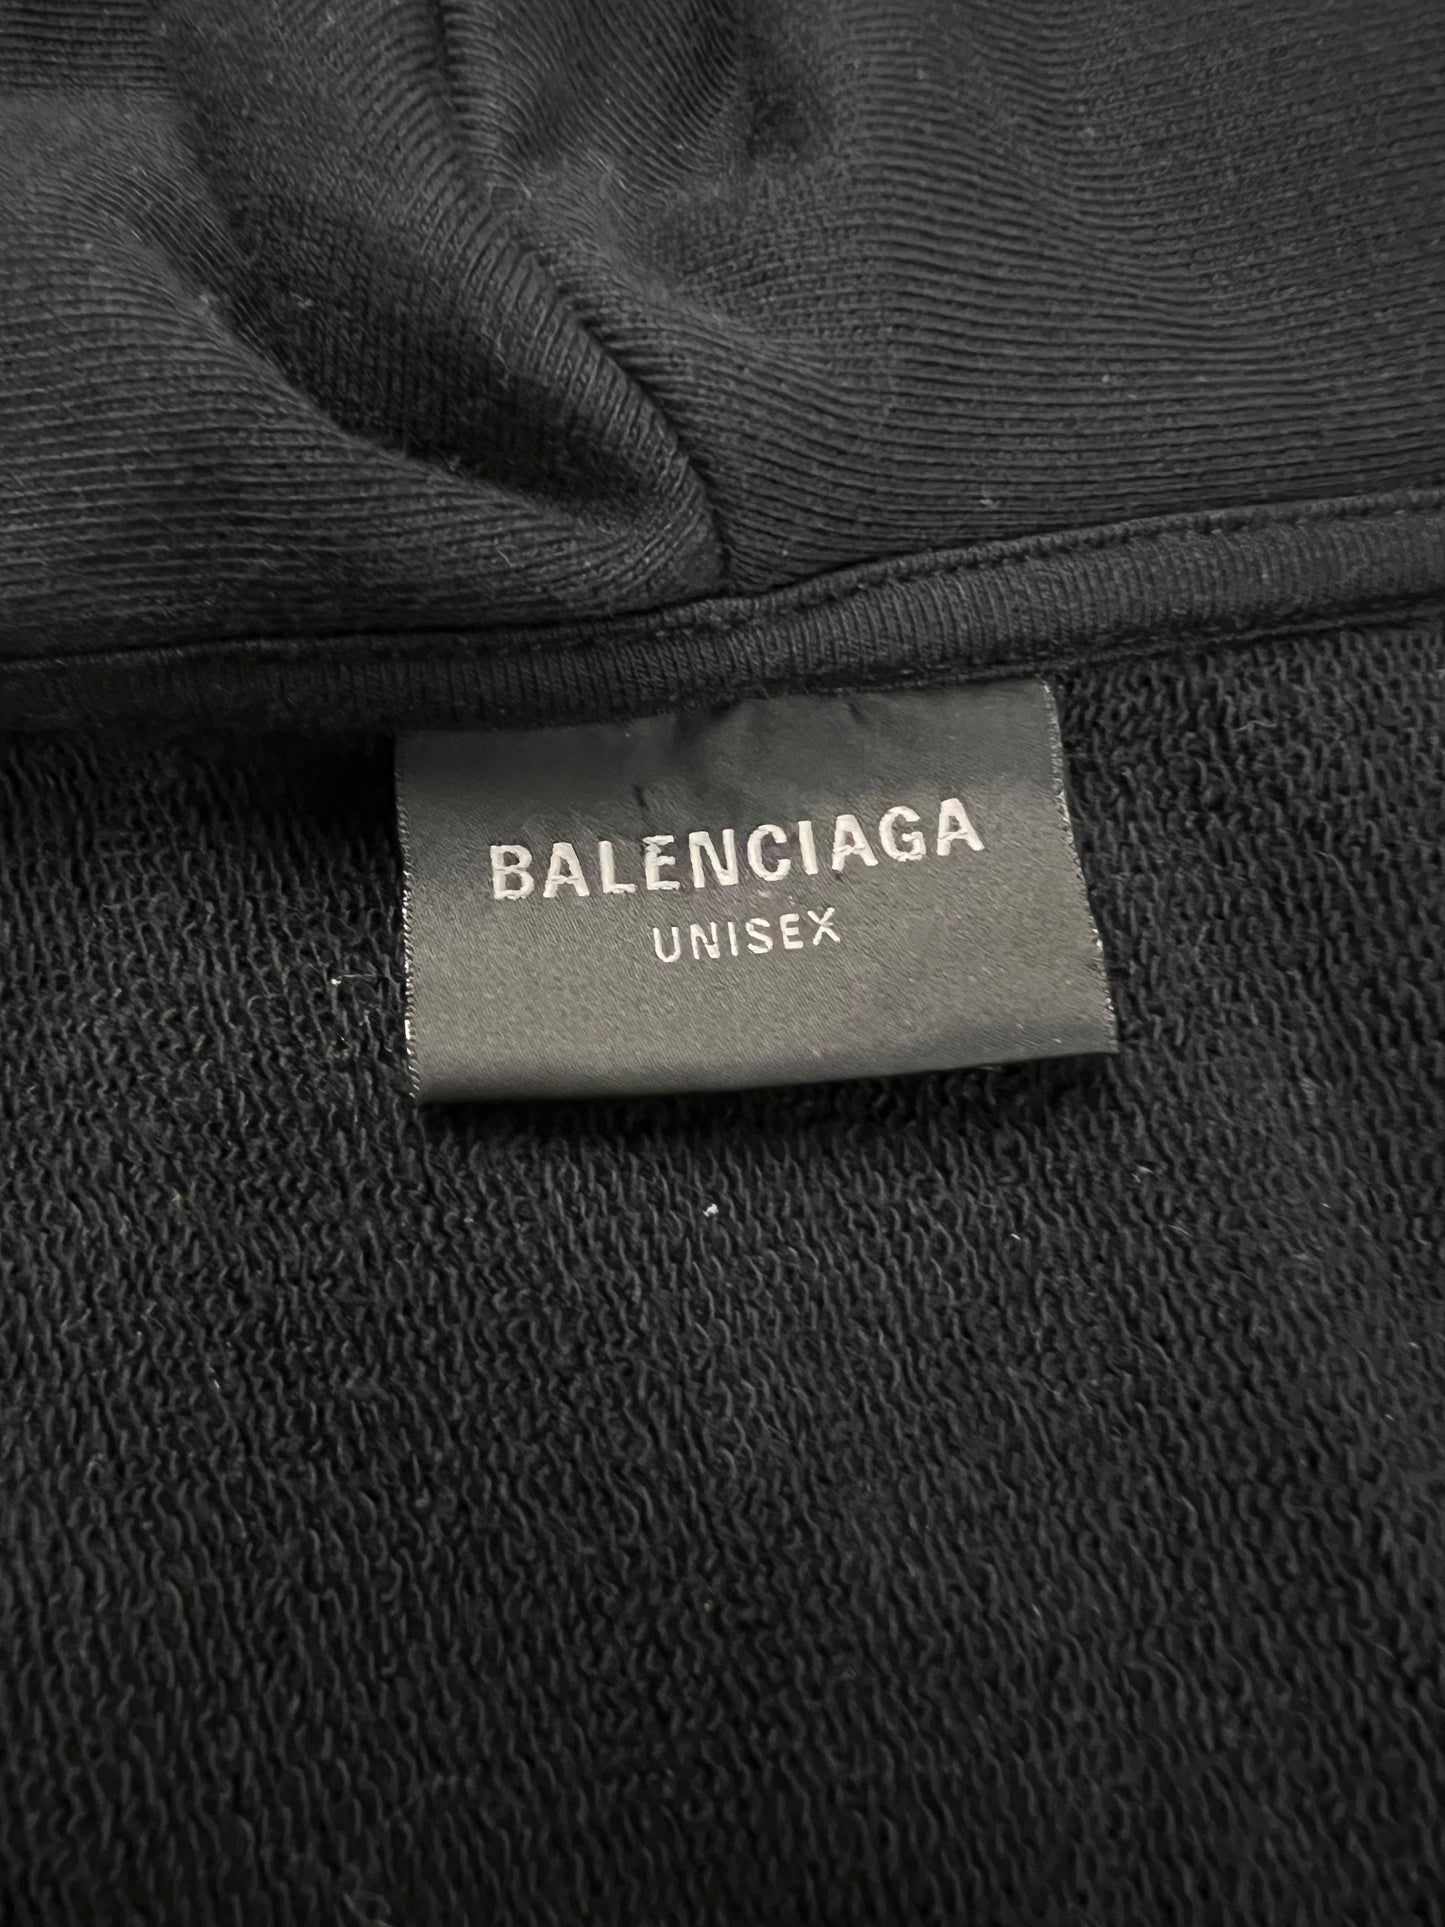 Balenciaga XL sticker zip upHoodie SZ:S